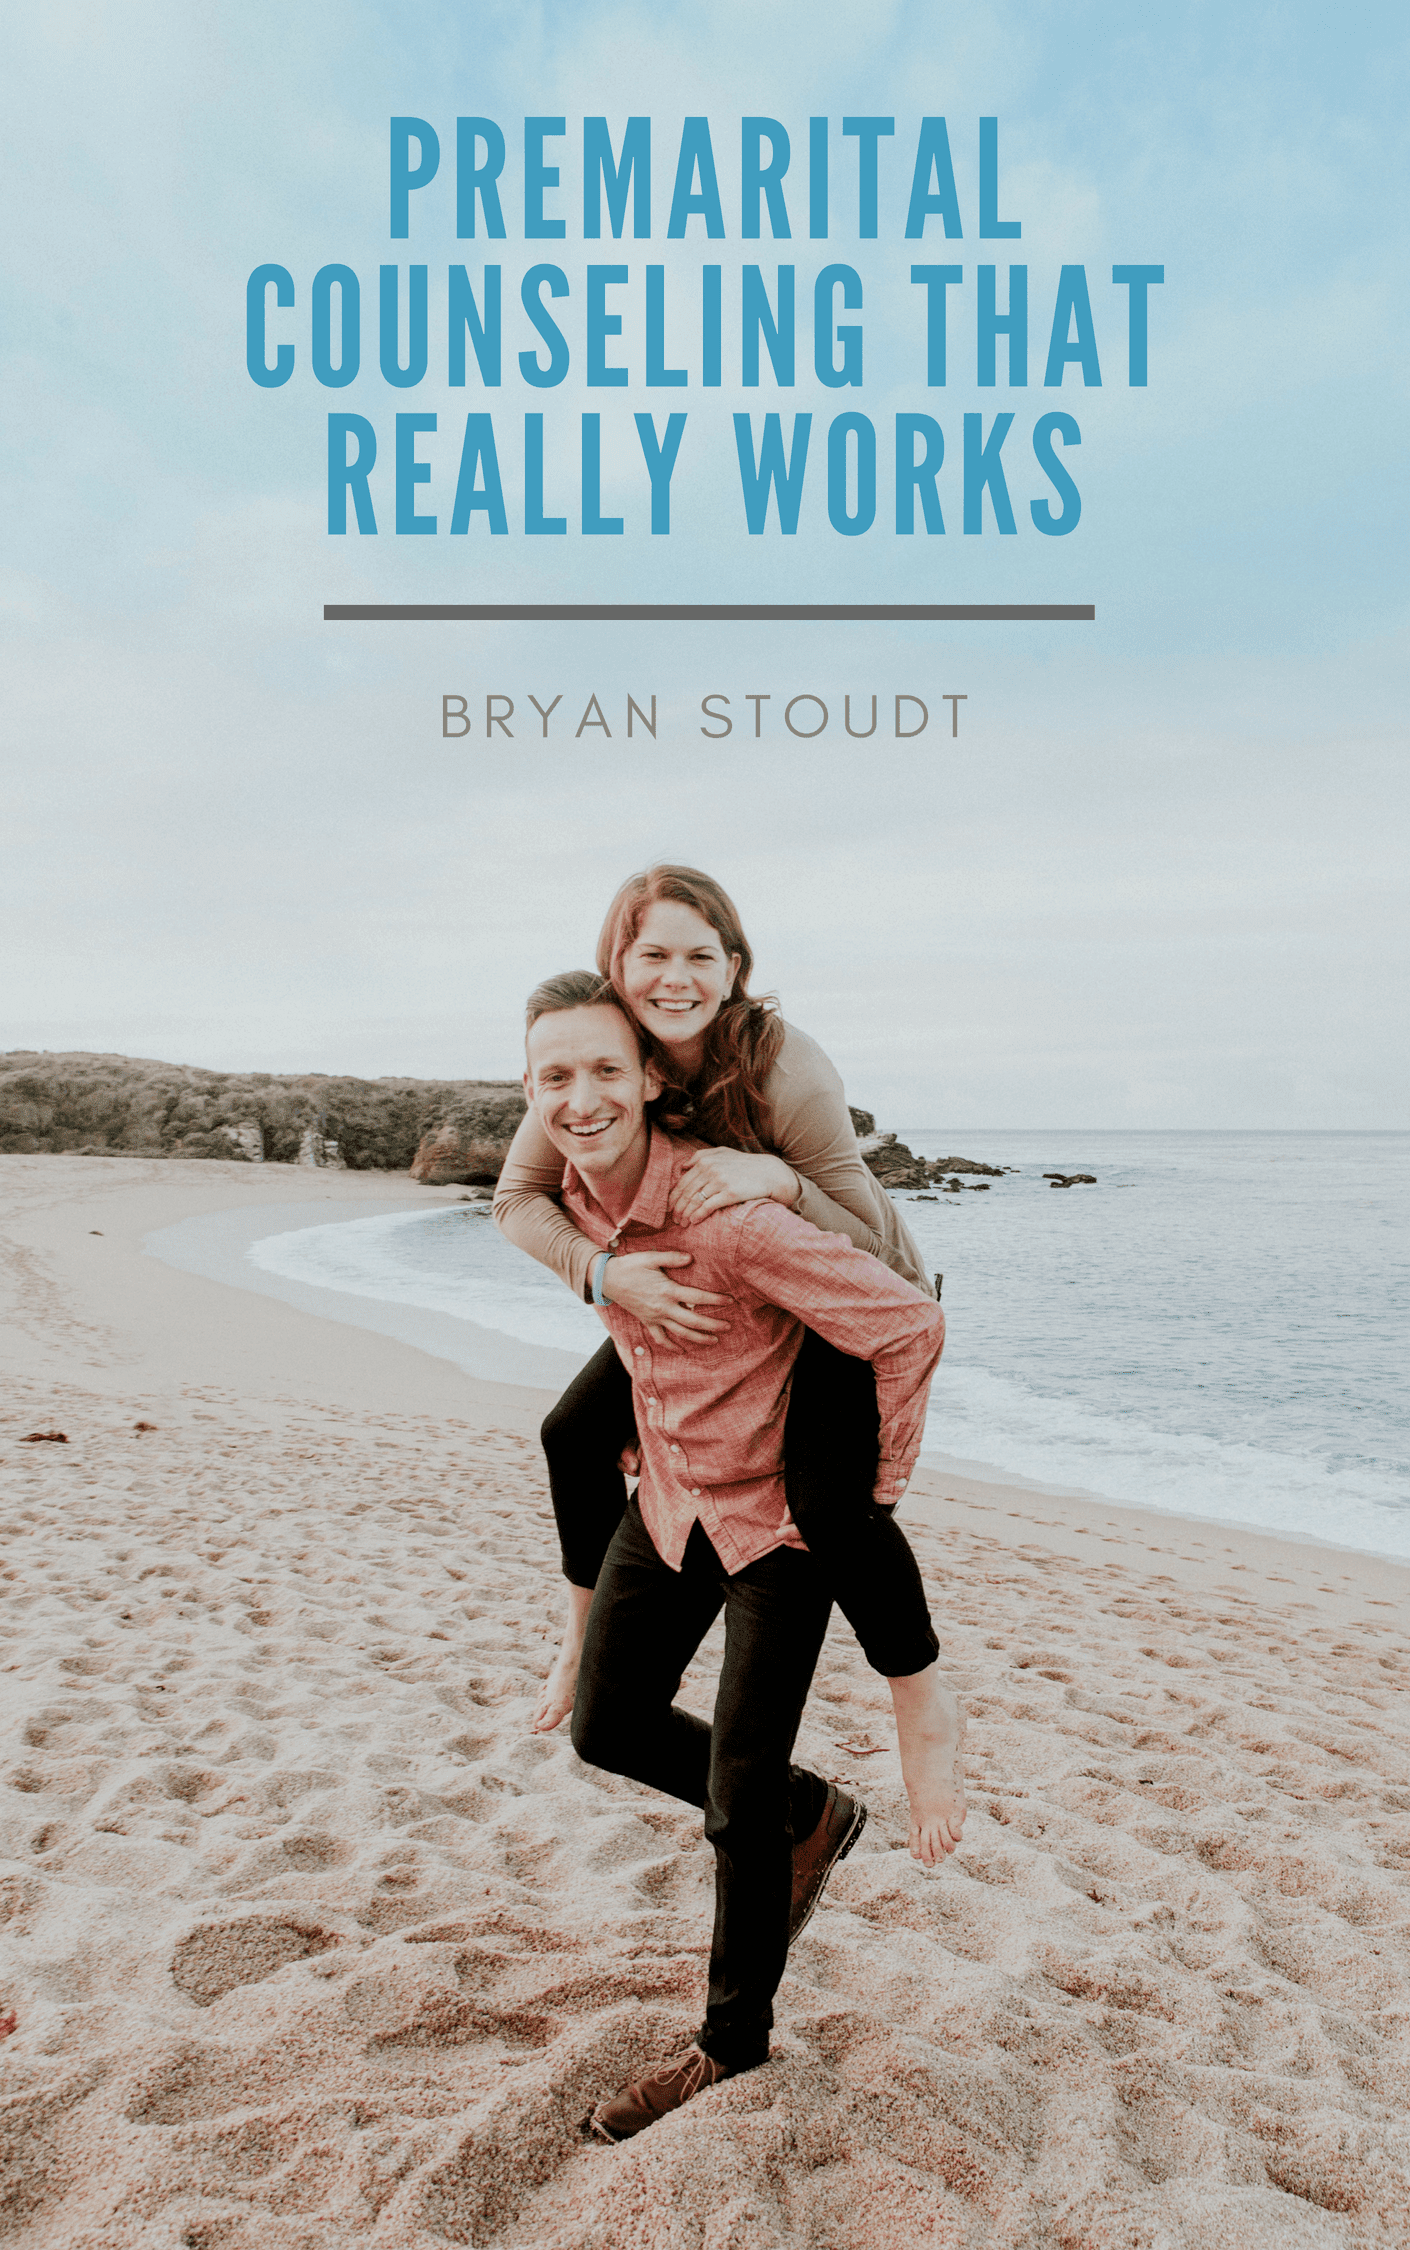 Christian premarital counseling Bryan Stoudt